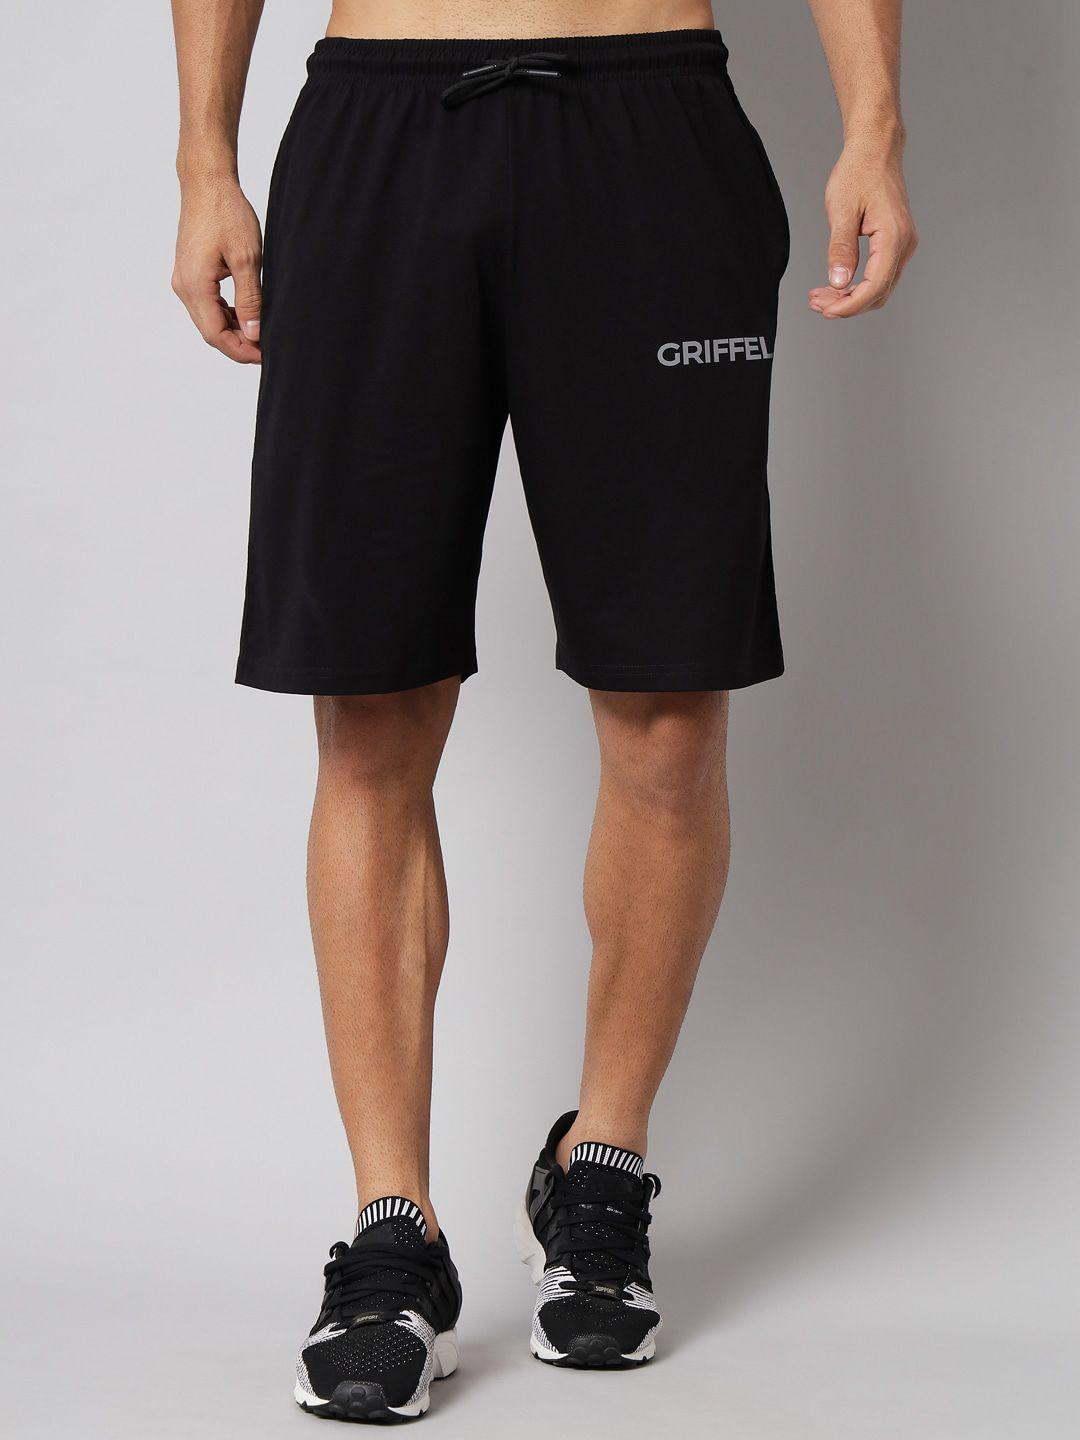 griffel men black sports shorts